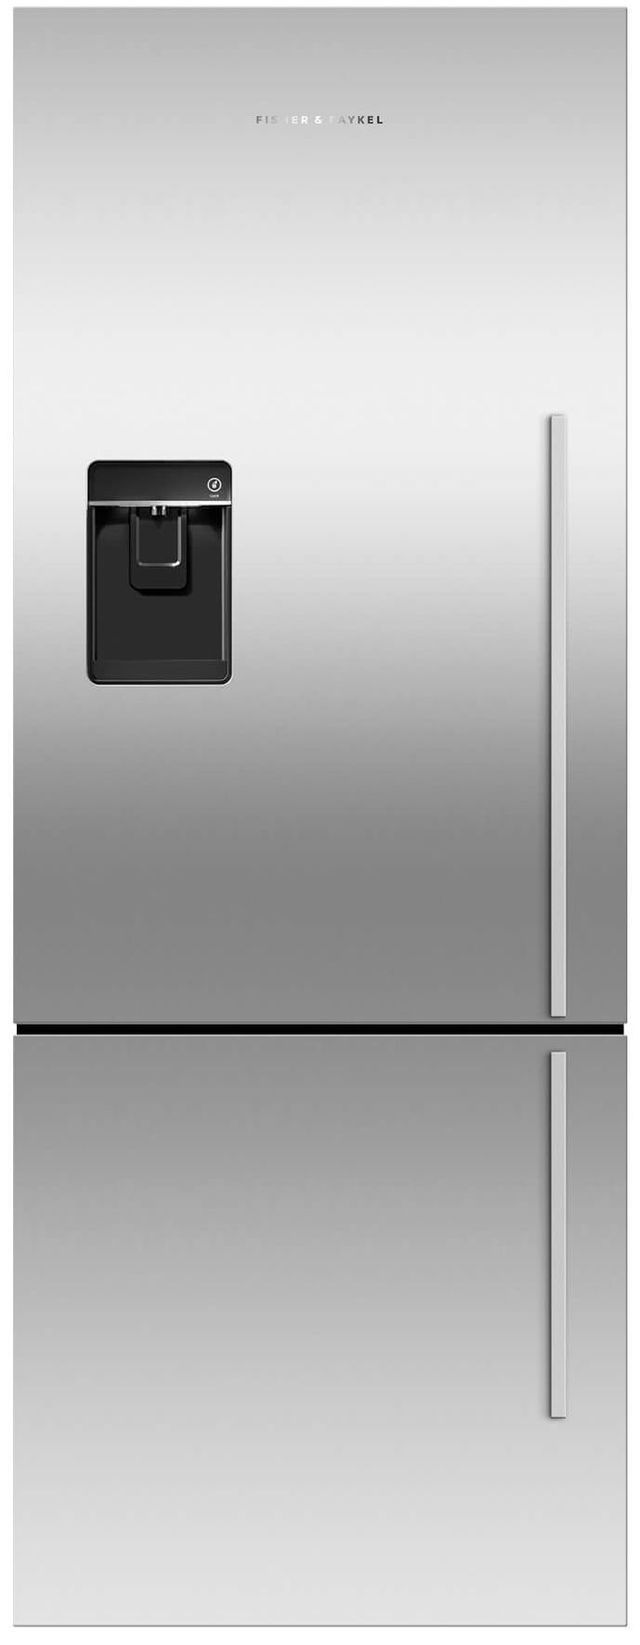 Fisher & Paykel Series 7 13.4 Cu. Ft. Stainless Steel Counter Depth Bottom Freezer Refrigerator